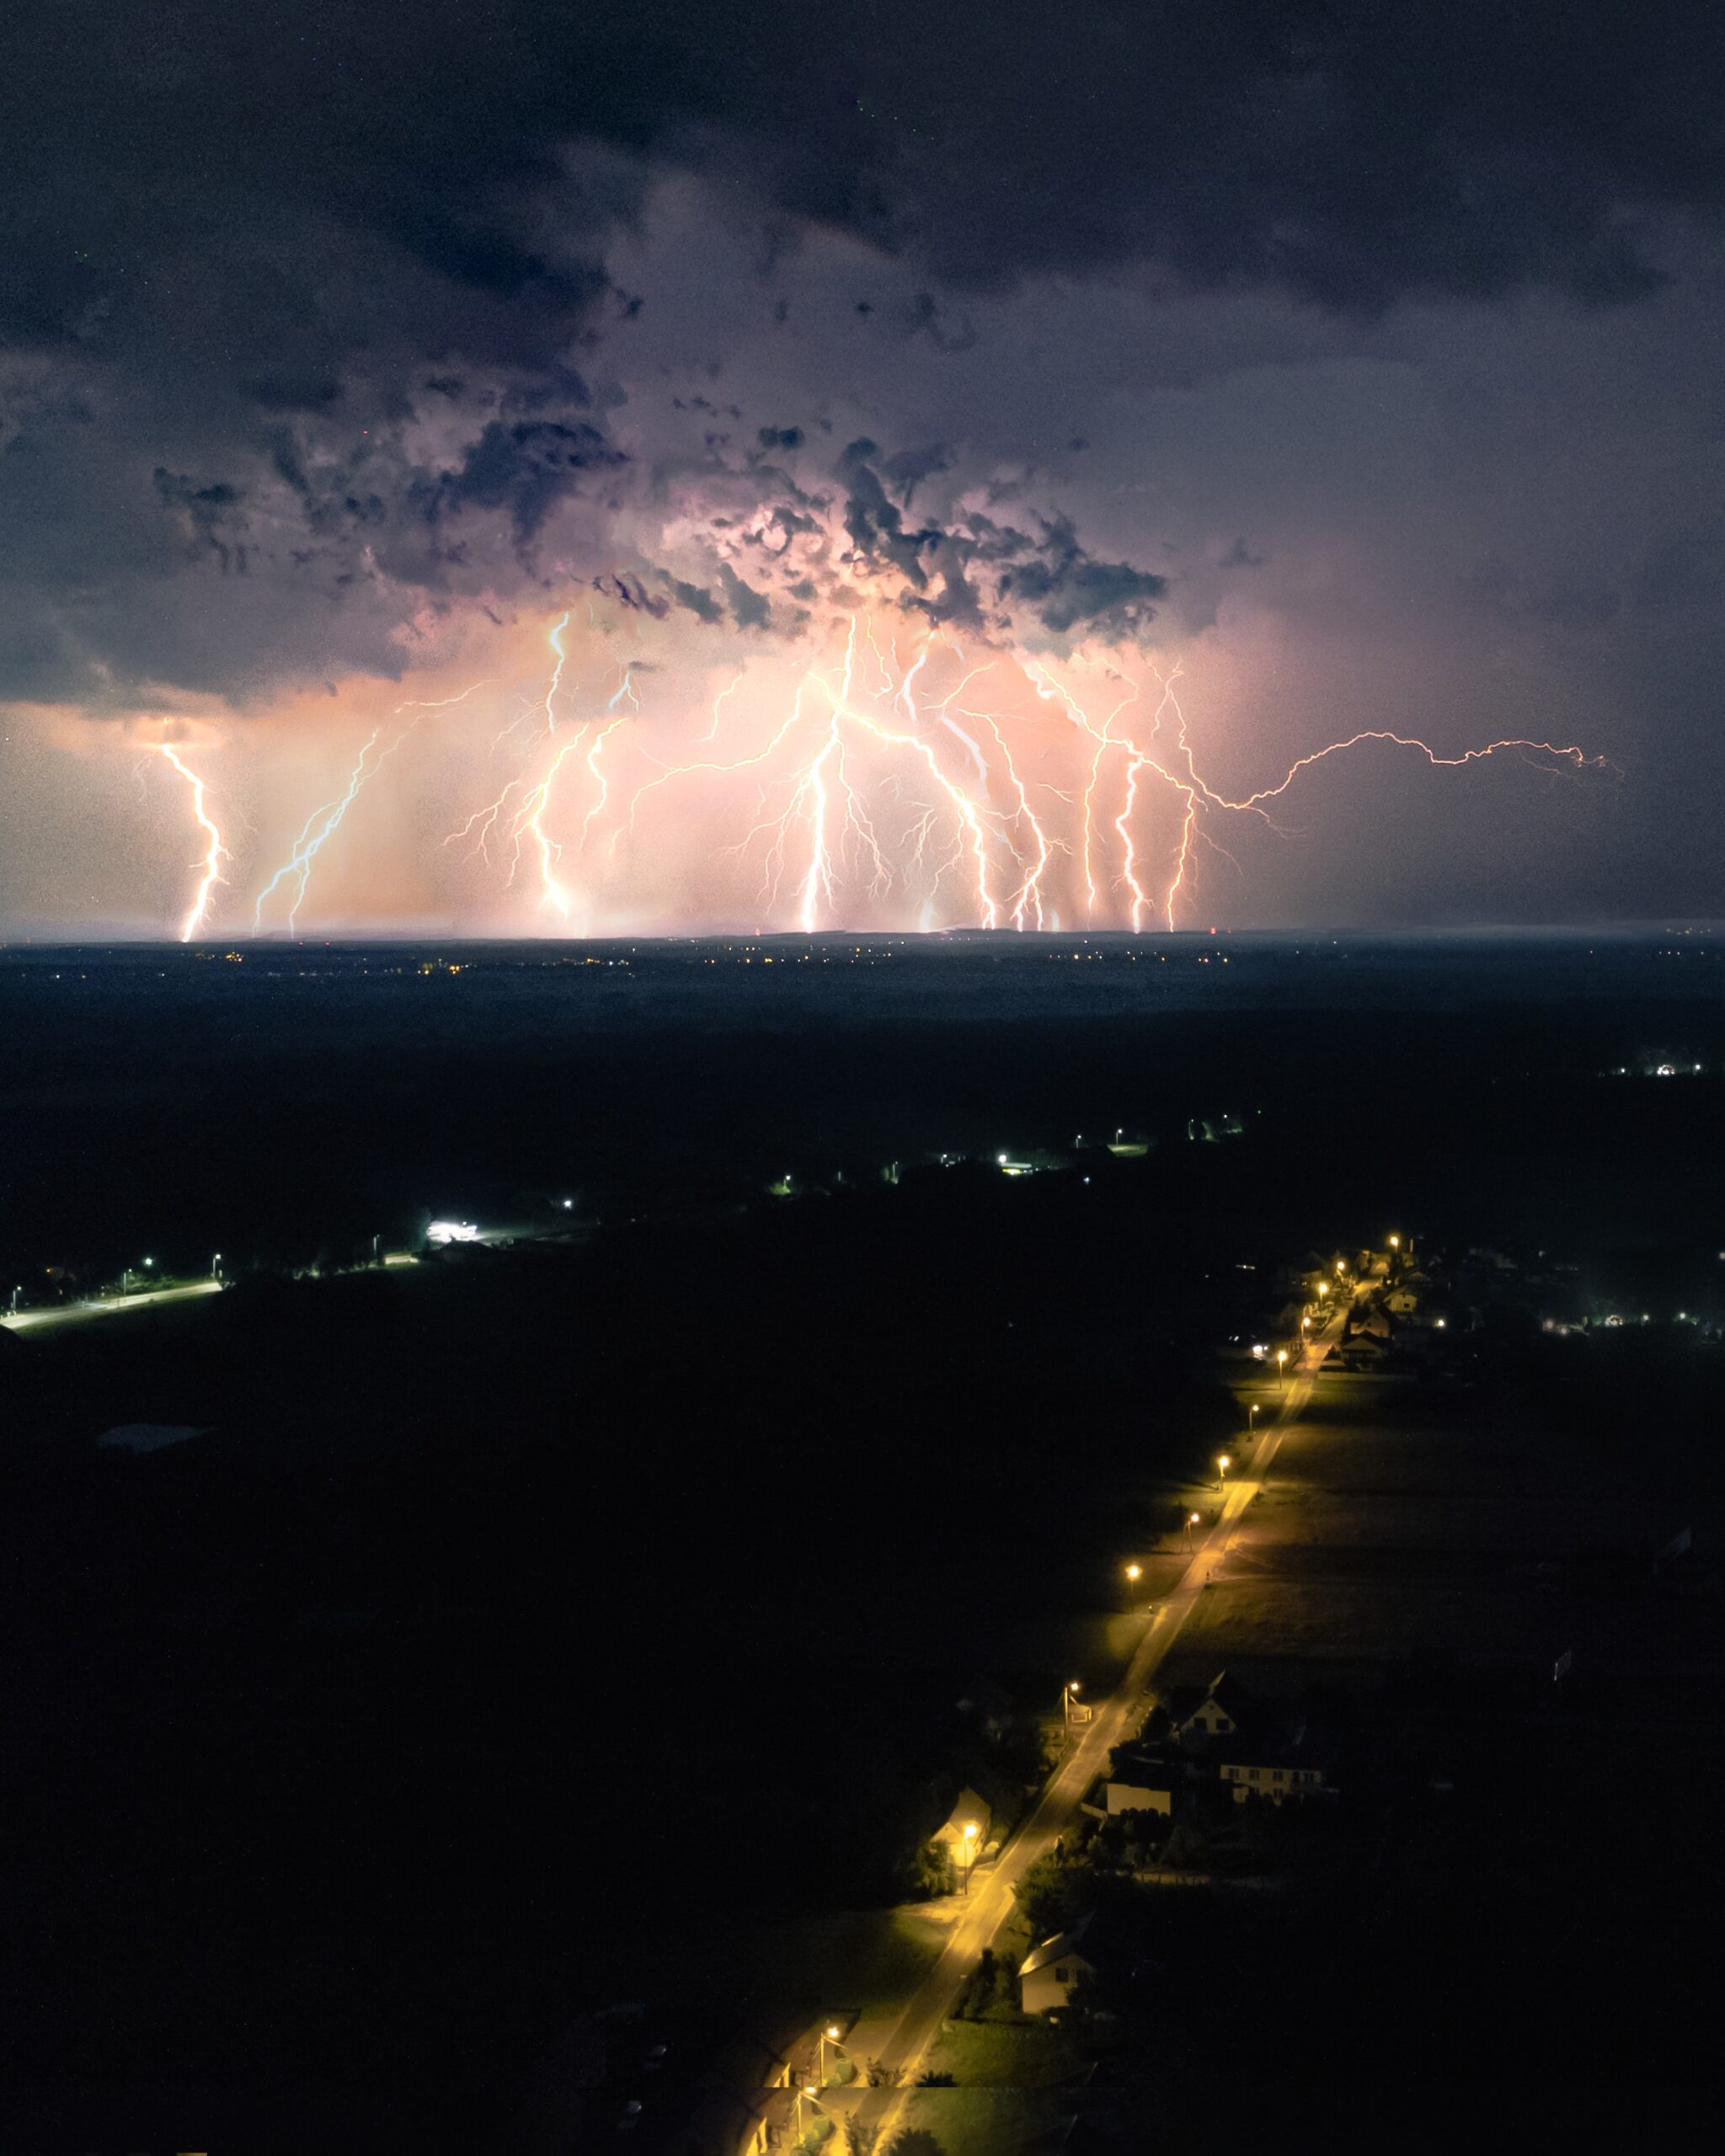 lightning in a suburban neighborhood